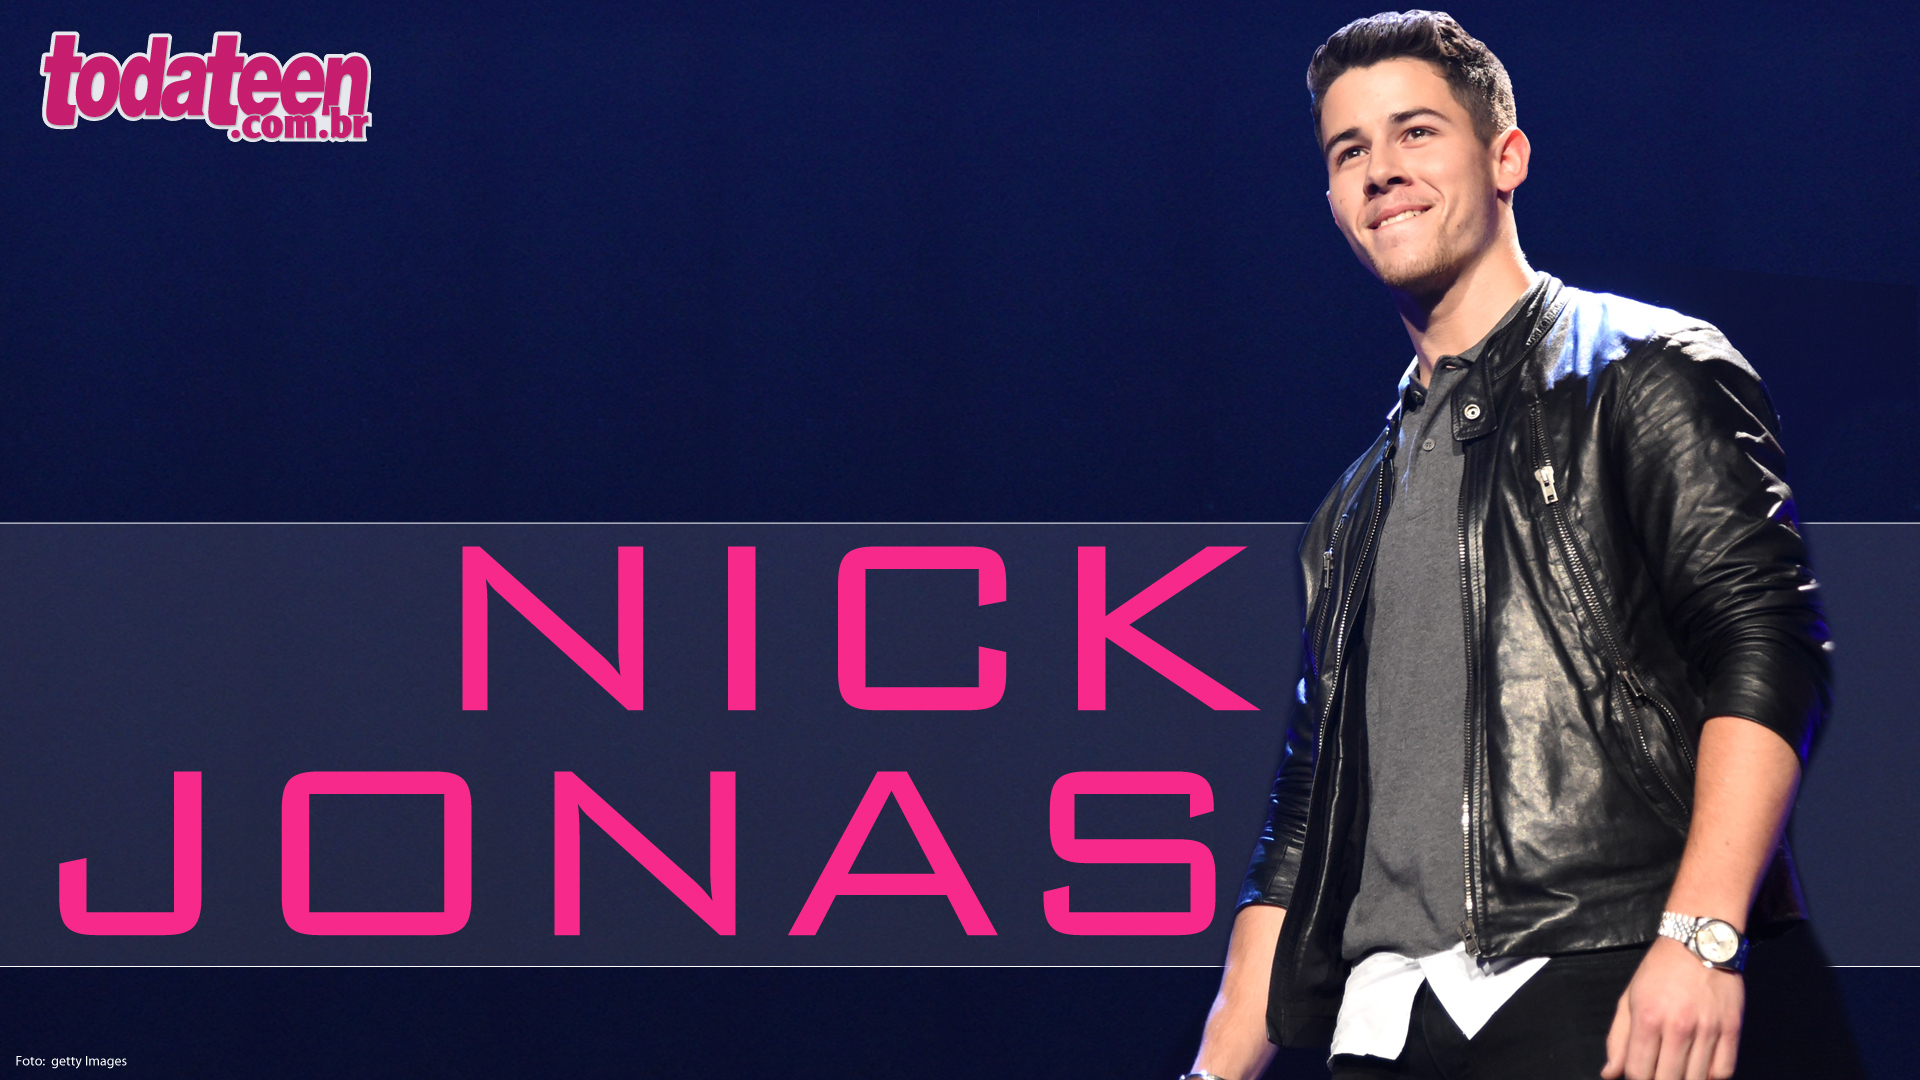 Nick Jonas Revista Todateen